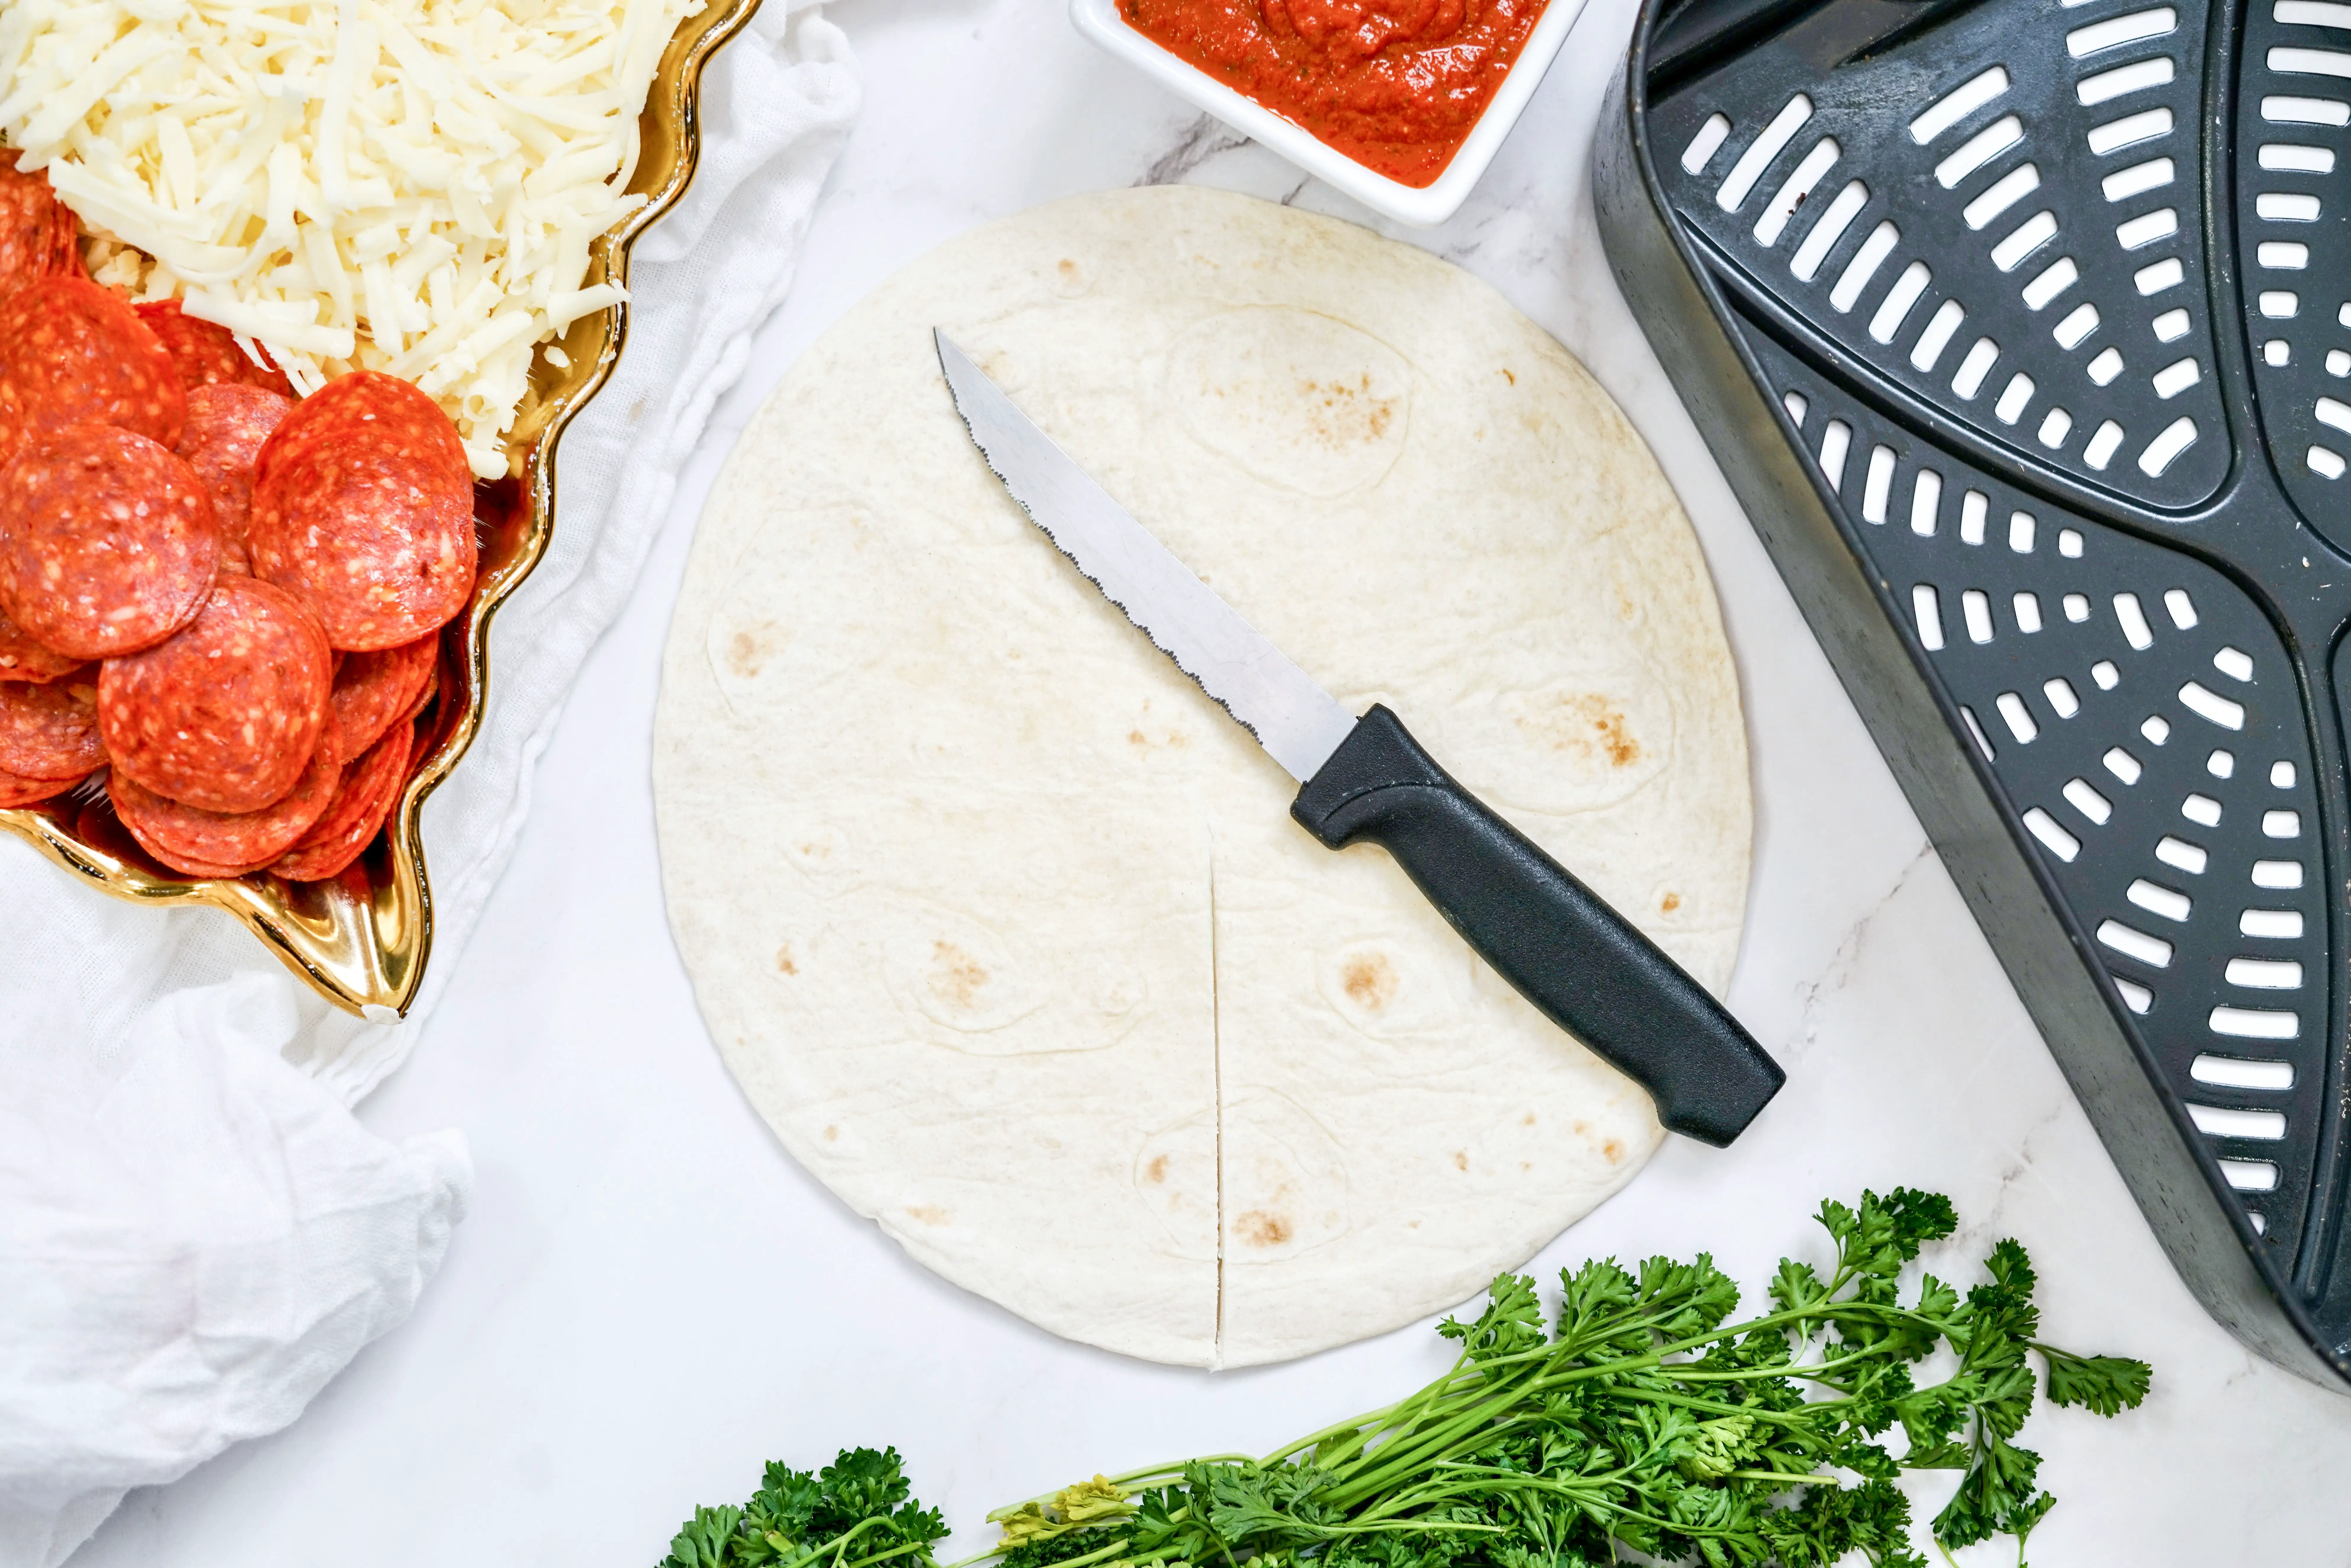 Make a cut on tortilla